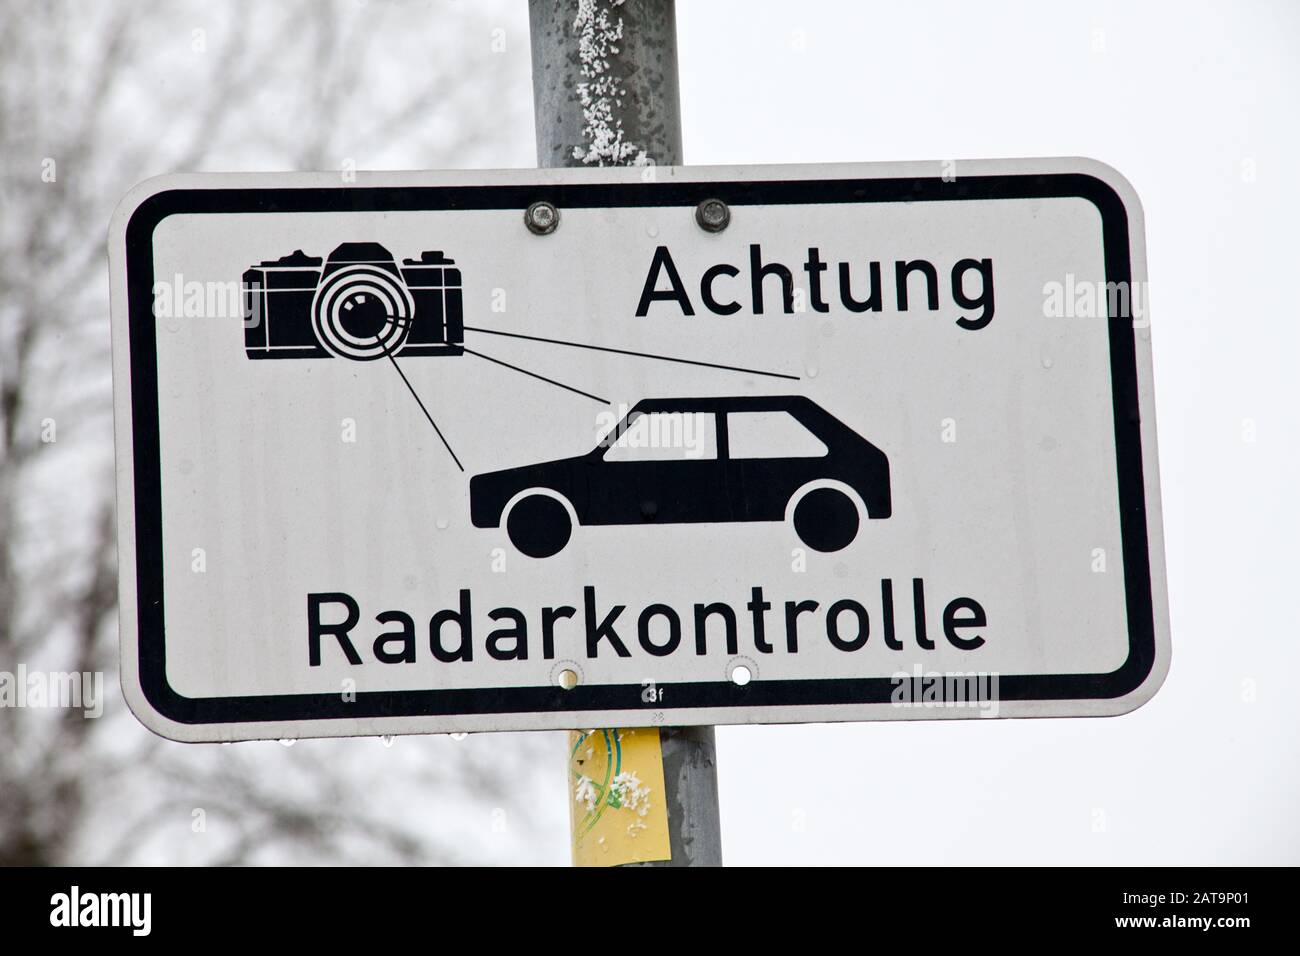 german language radar control sign warning car drivers about speed control. Text Translation 'Attention Radar control' Stock Photo